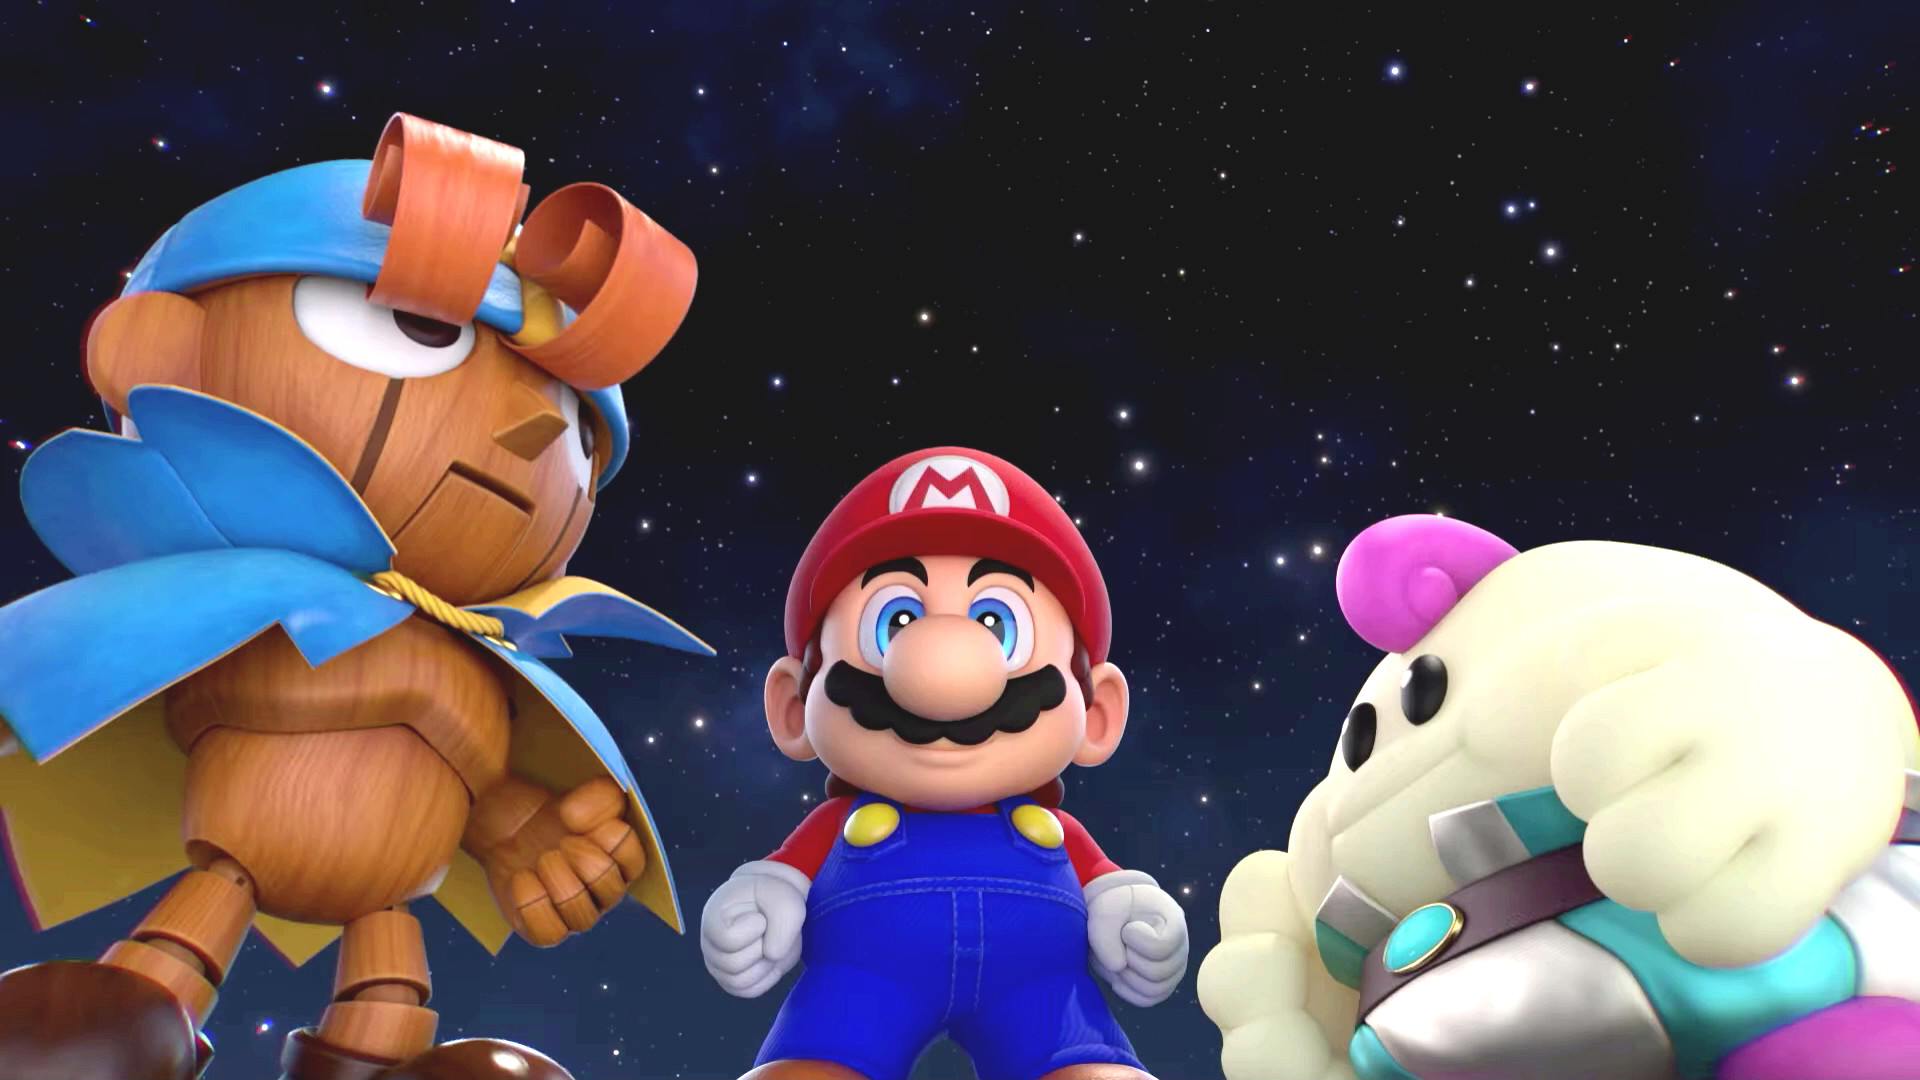 Super Mario Bros. Wonder, Mario RPG Remake and More Coming to Nintendo  Switch - CNET